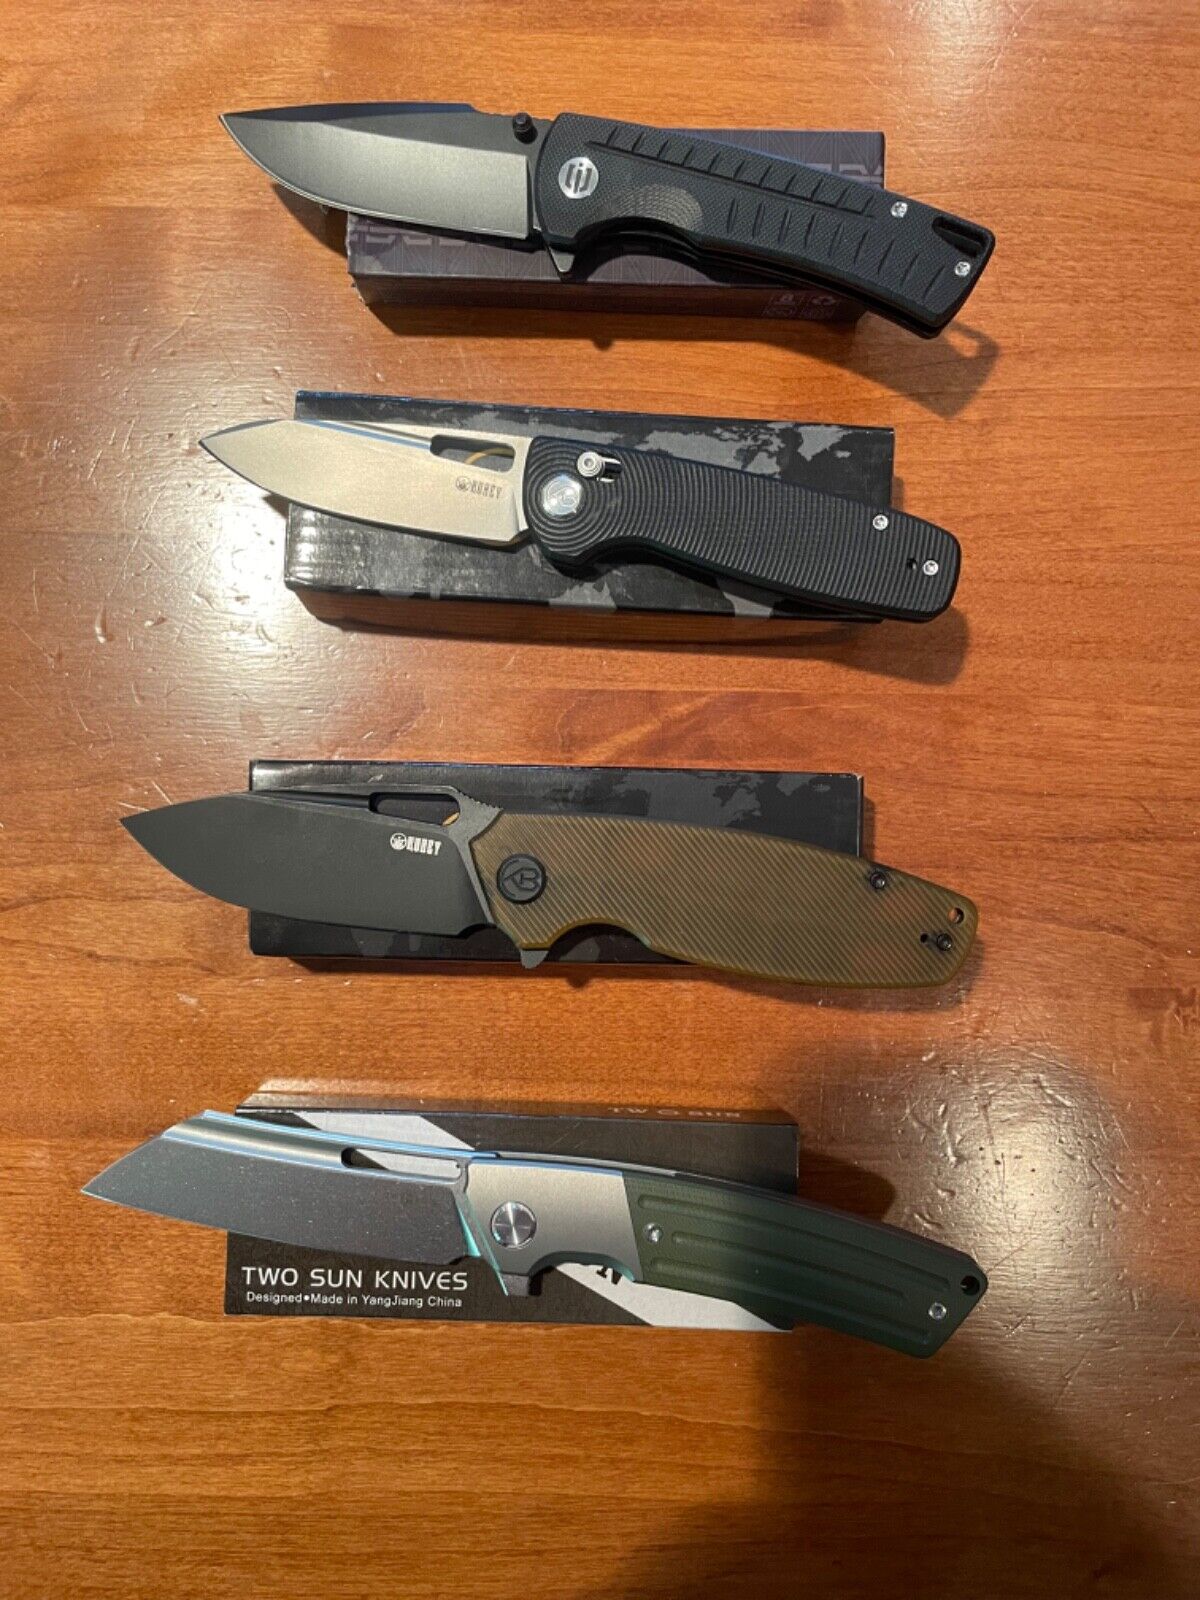 Knife Lot “Great Deal”